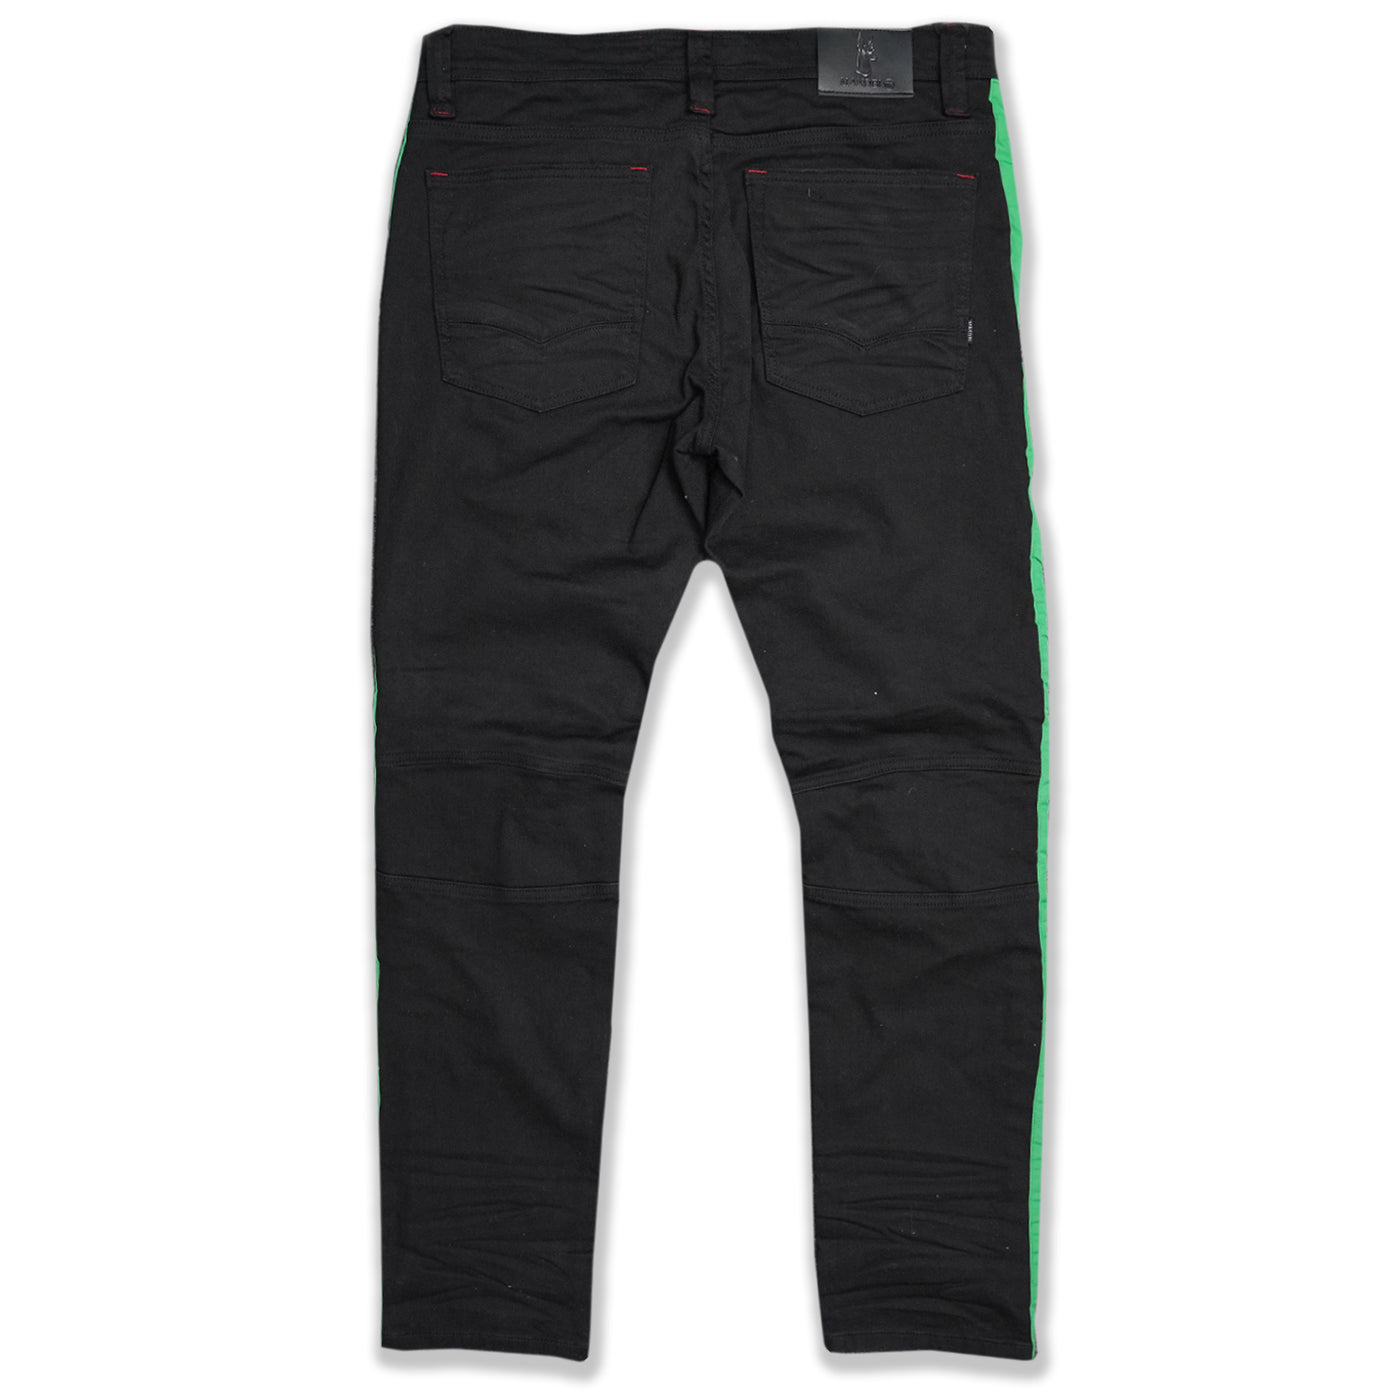 M1950 Makobi Biker Jeans w/ Nylon Stripes - Black